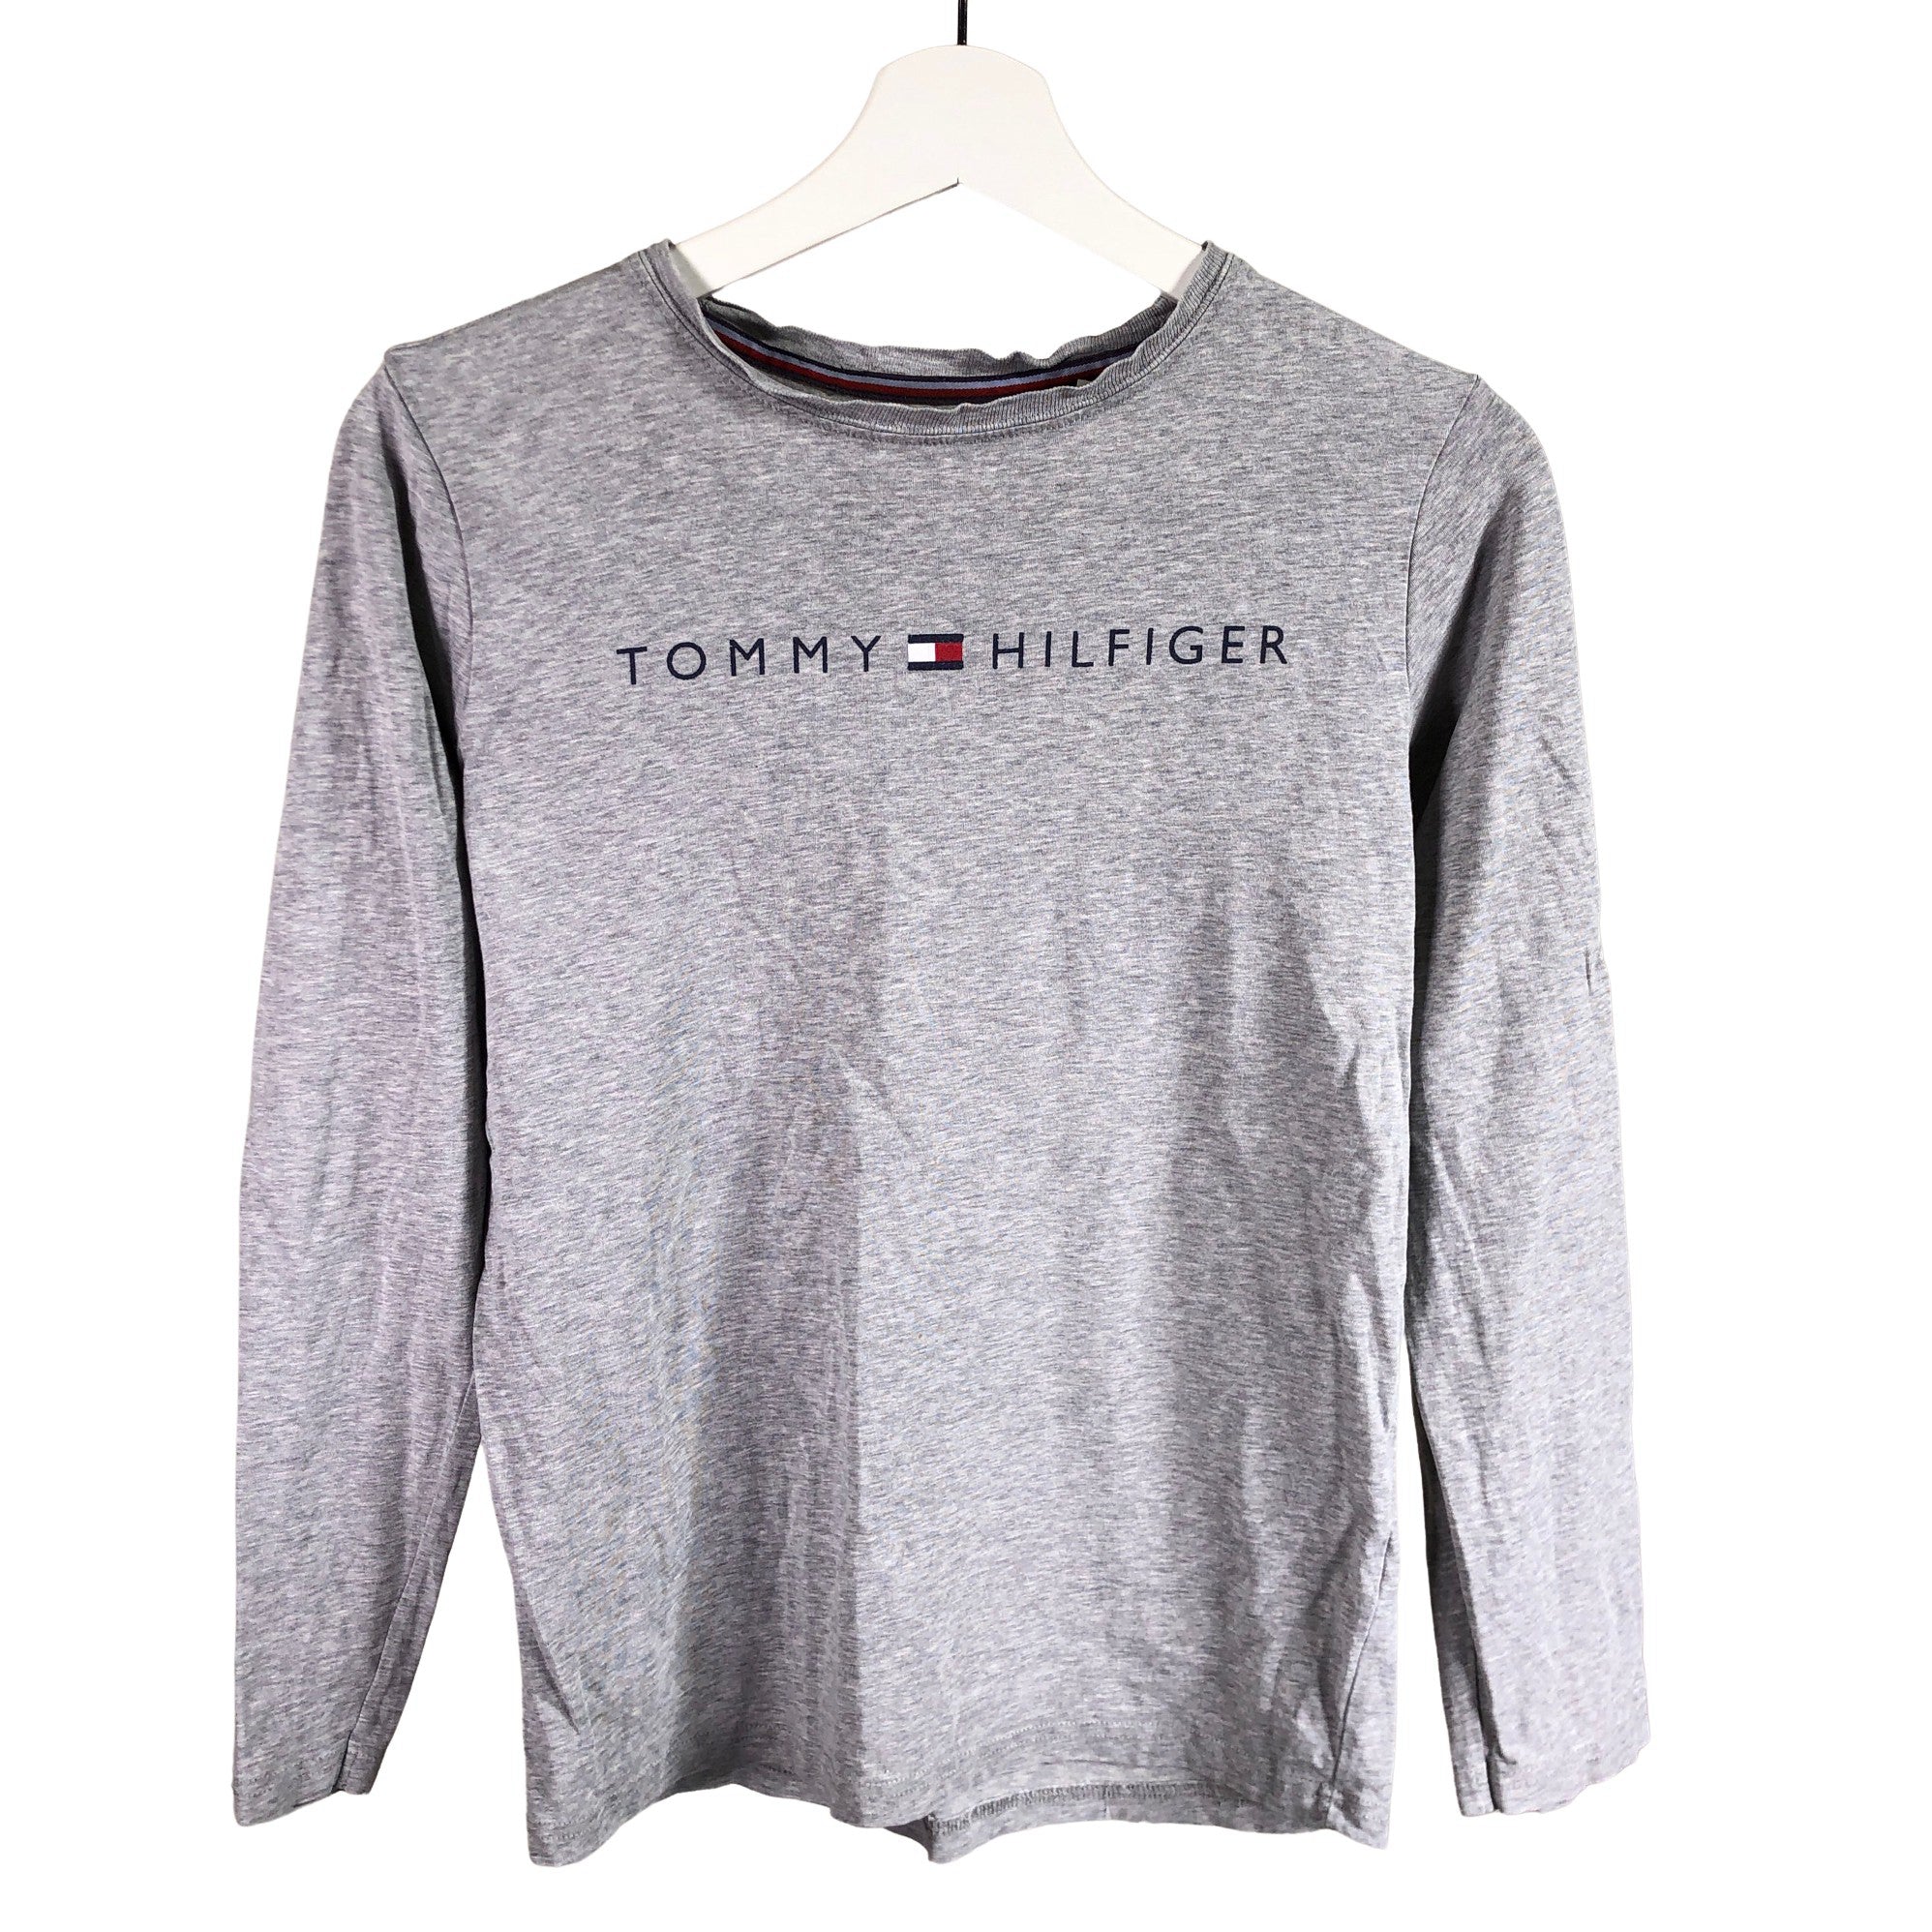 Unisex Tommy Hilfiger Tricot shirt, size 164 - 170 (Grey) | Emmy